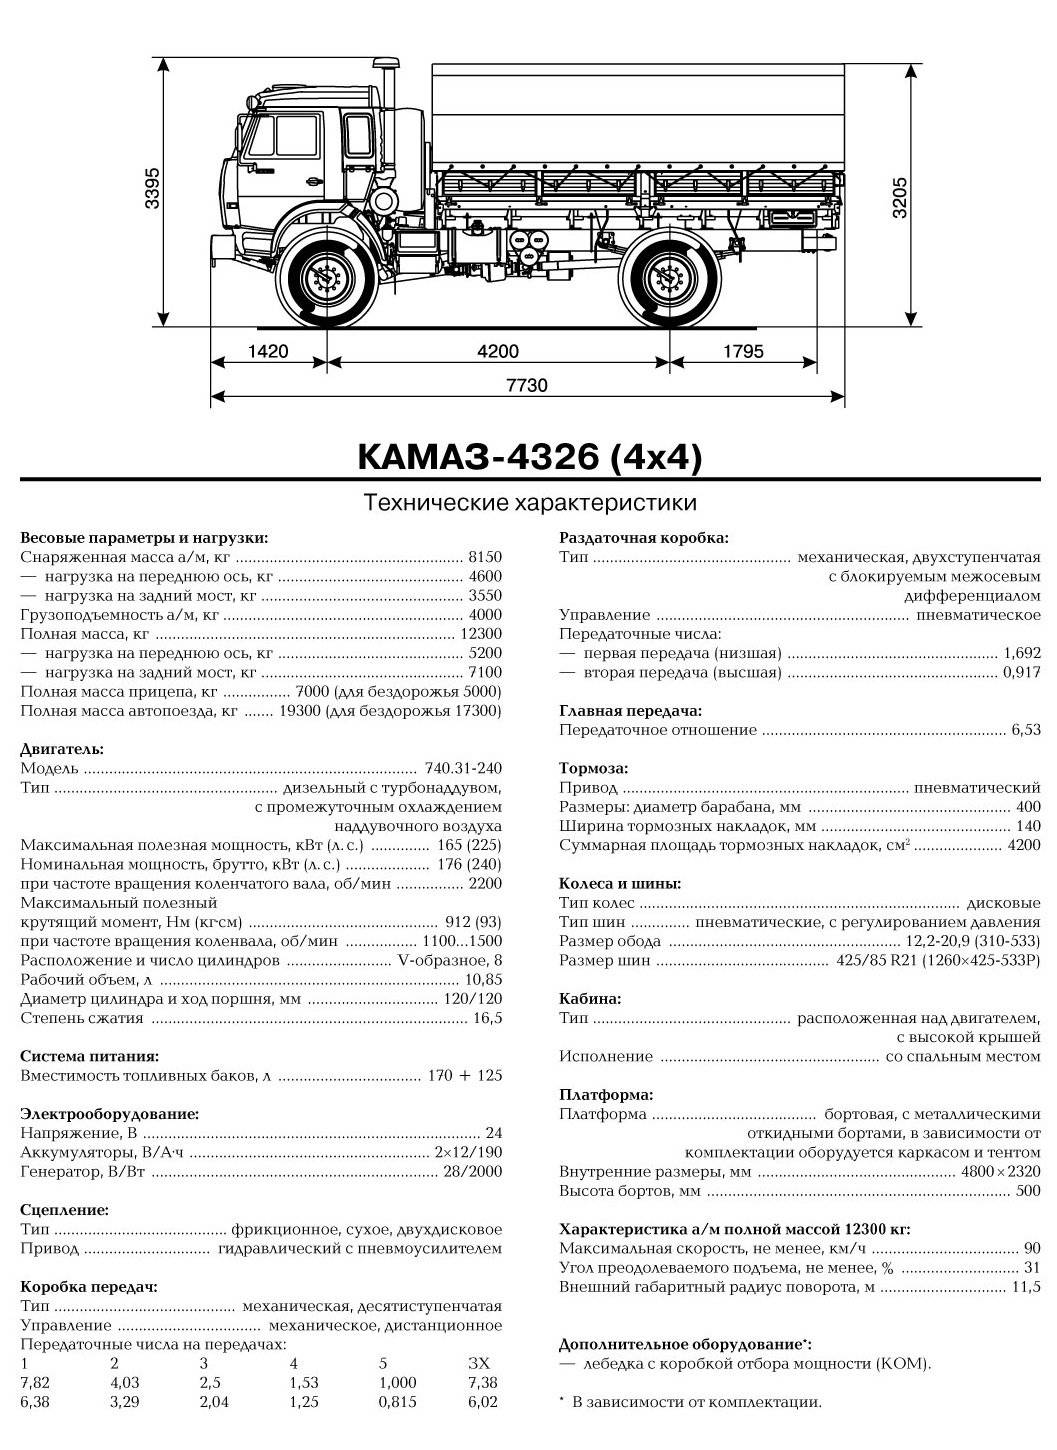 Камаз-65222 технические характеристики и устройство, двигатель и расход топлива